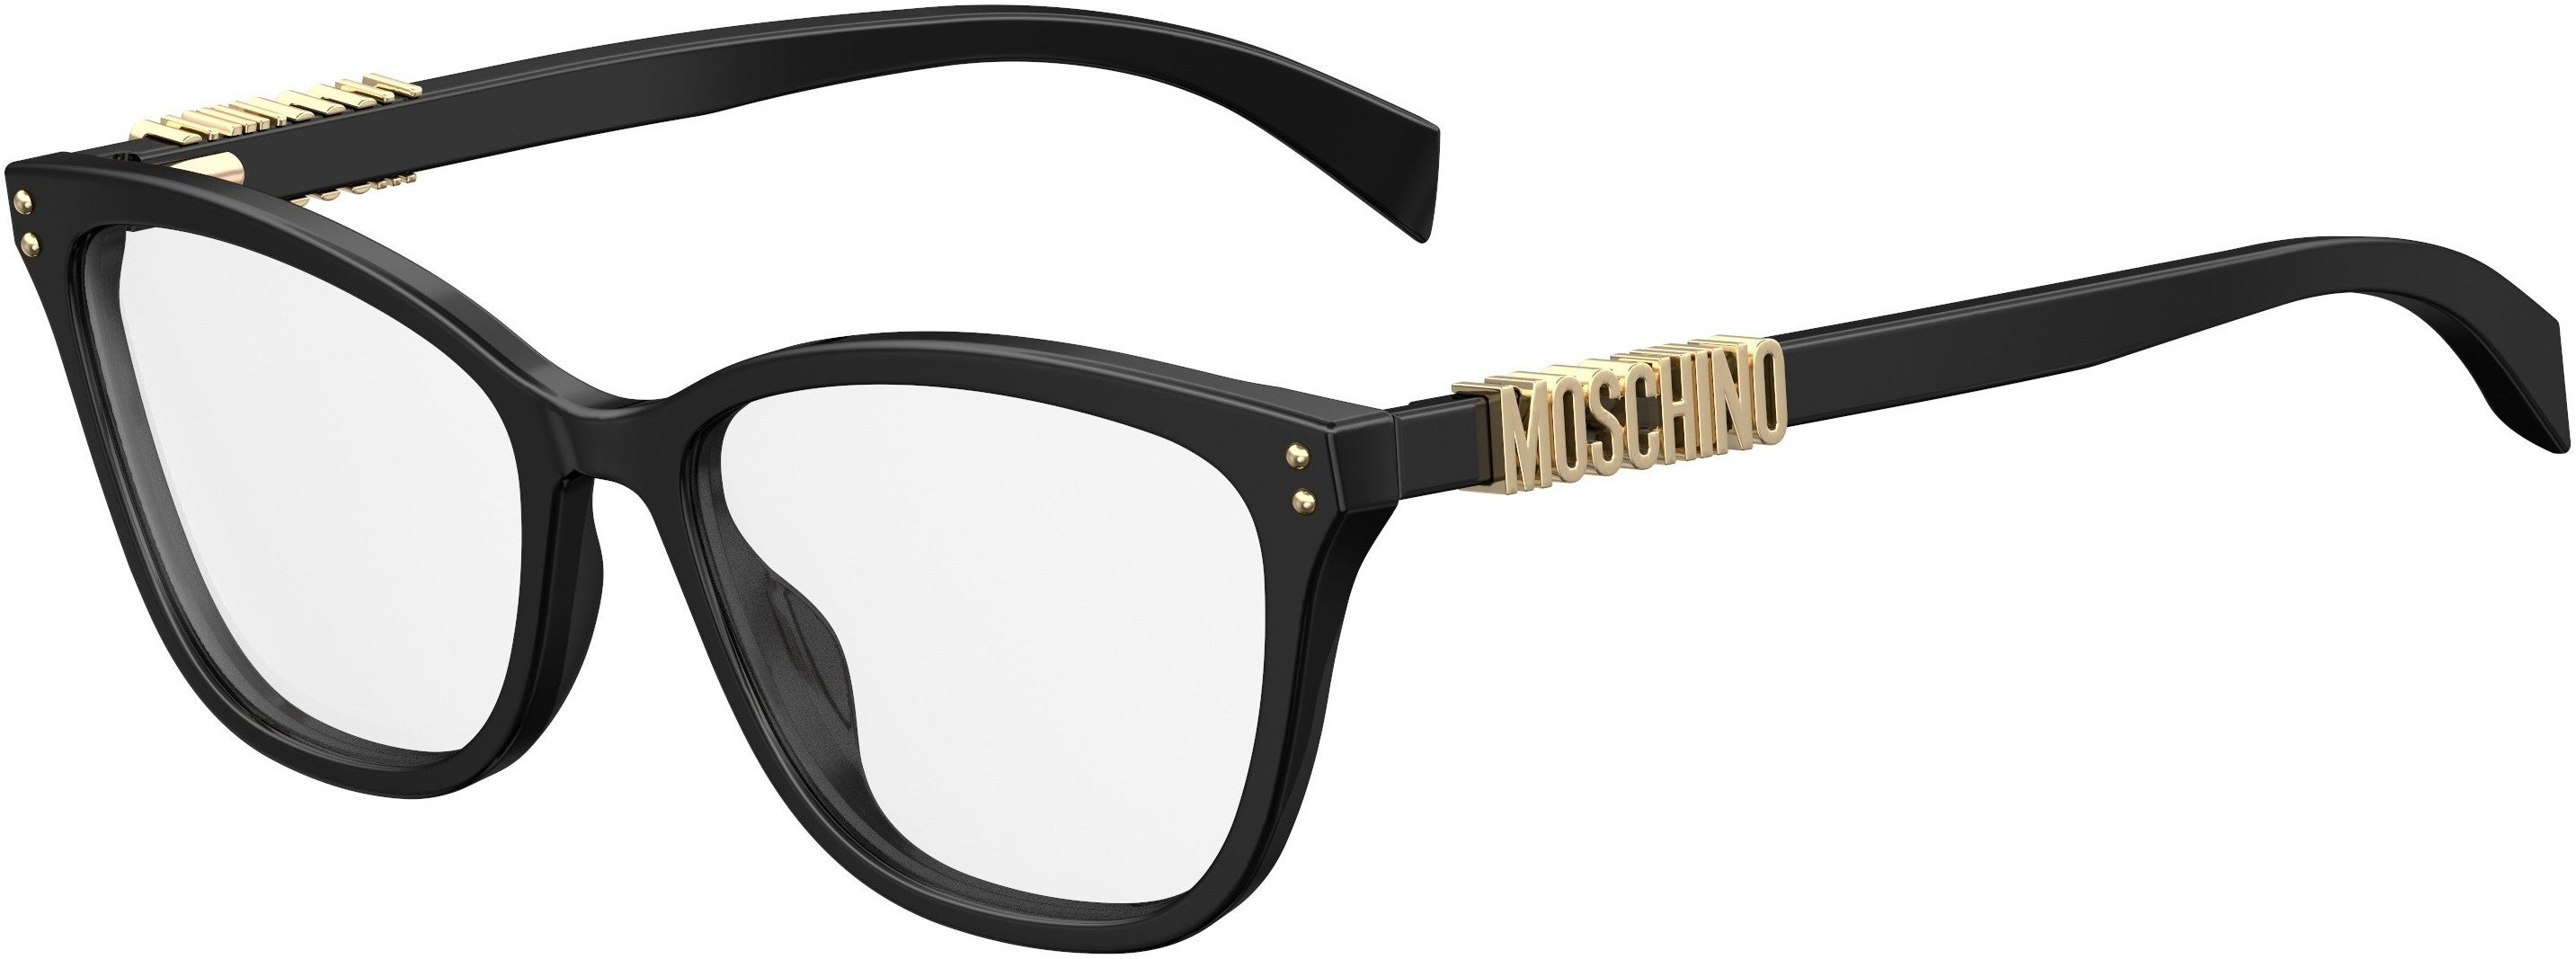  Moschino 500 Rectangular Eyeglasses 0807-0807  Black (00 Demo Lens)